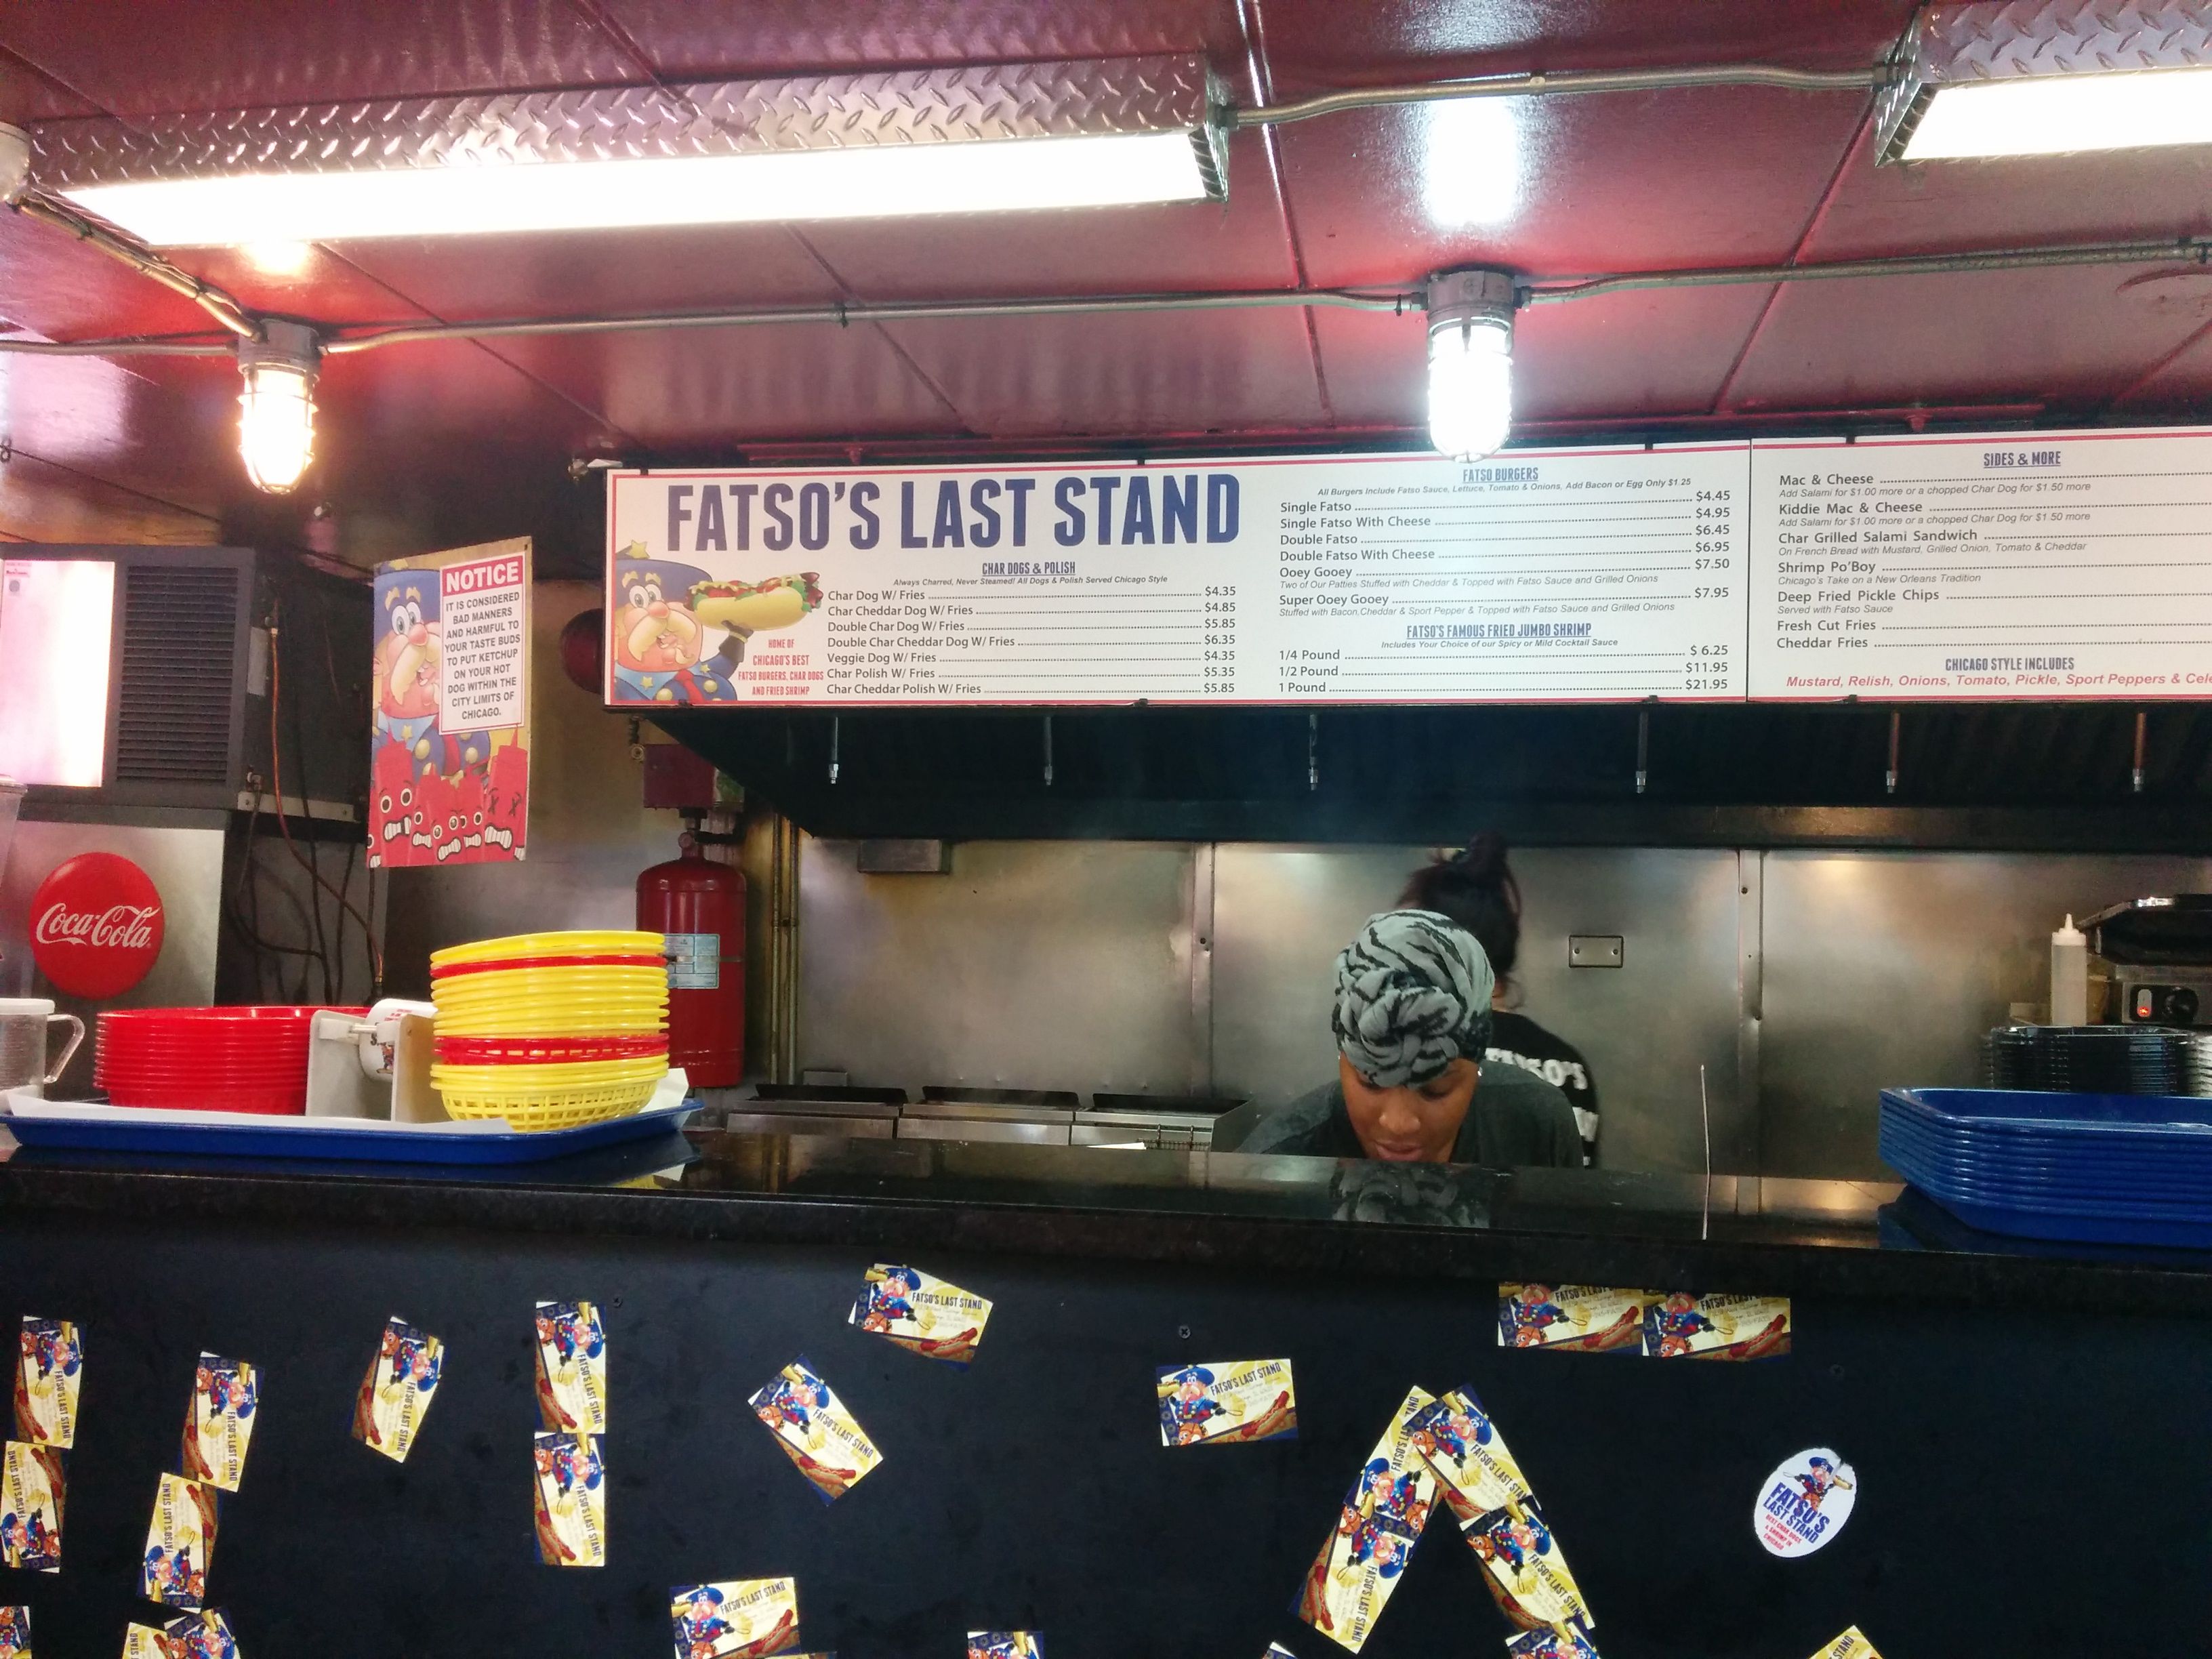 Fatso's last stand menu